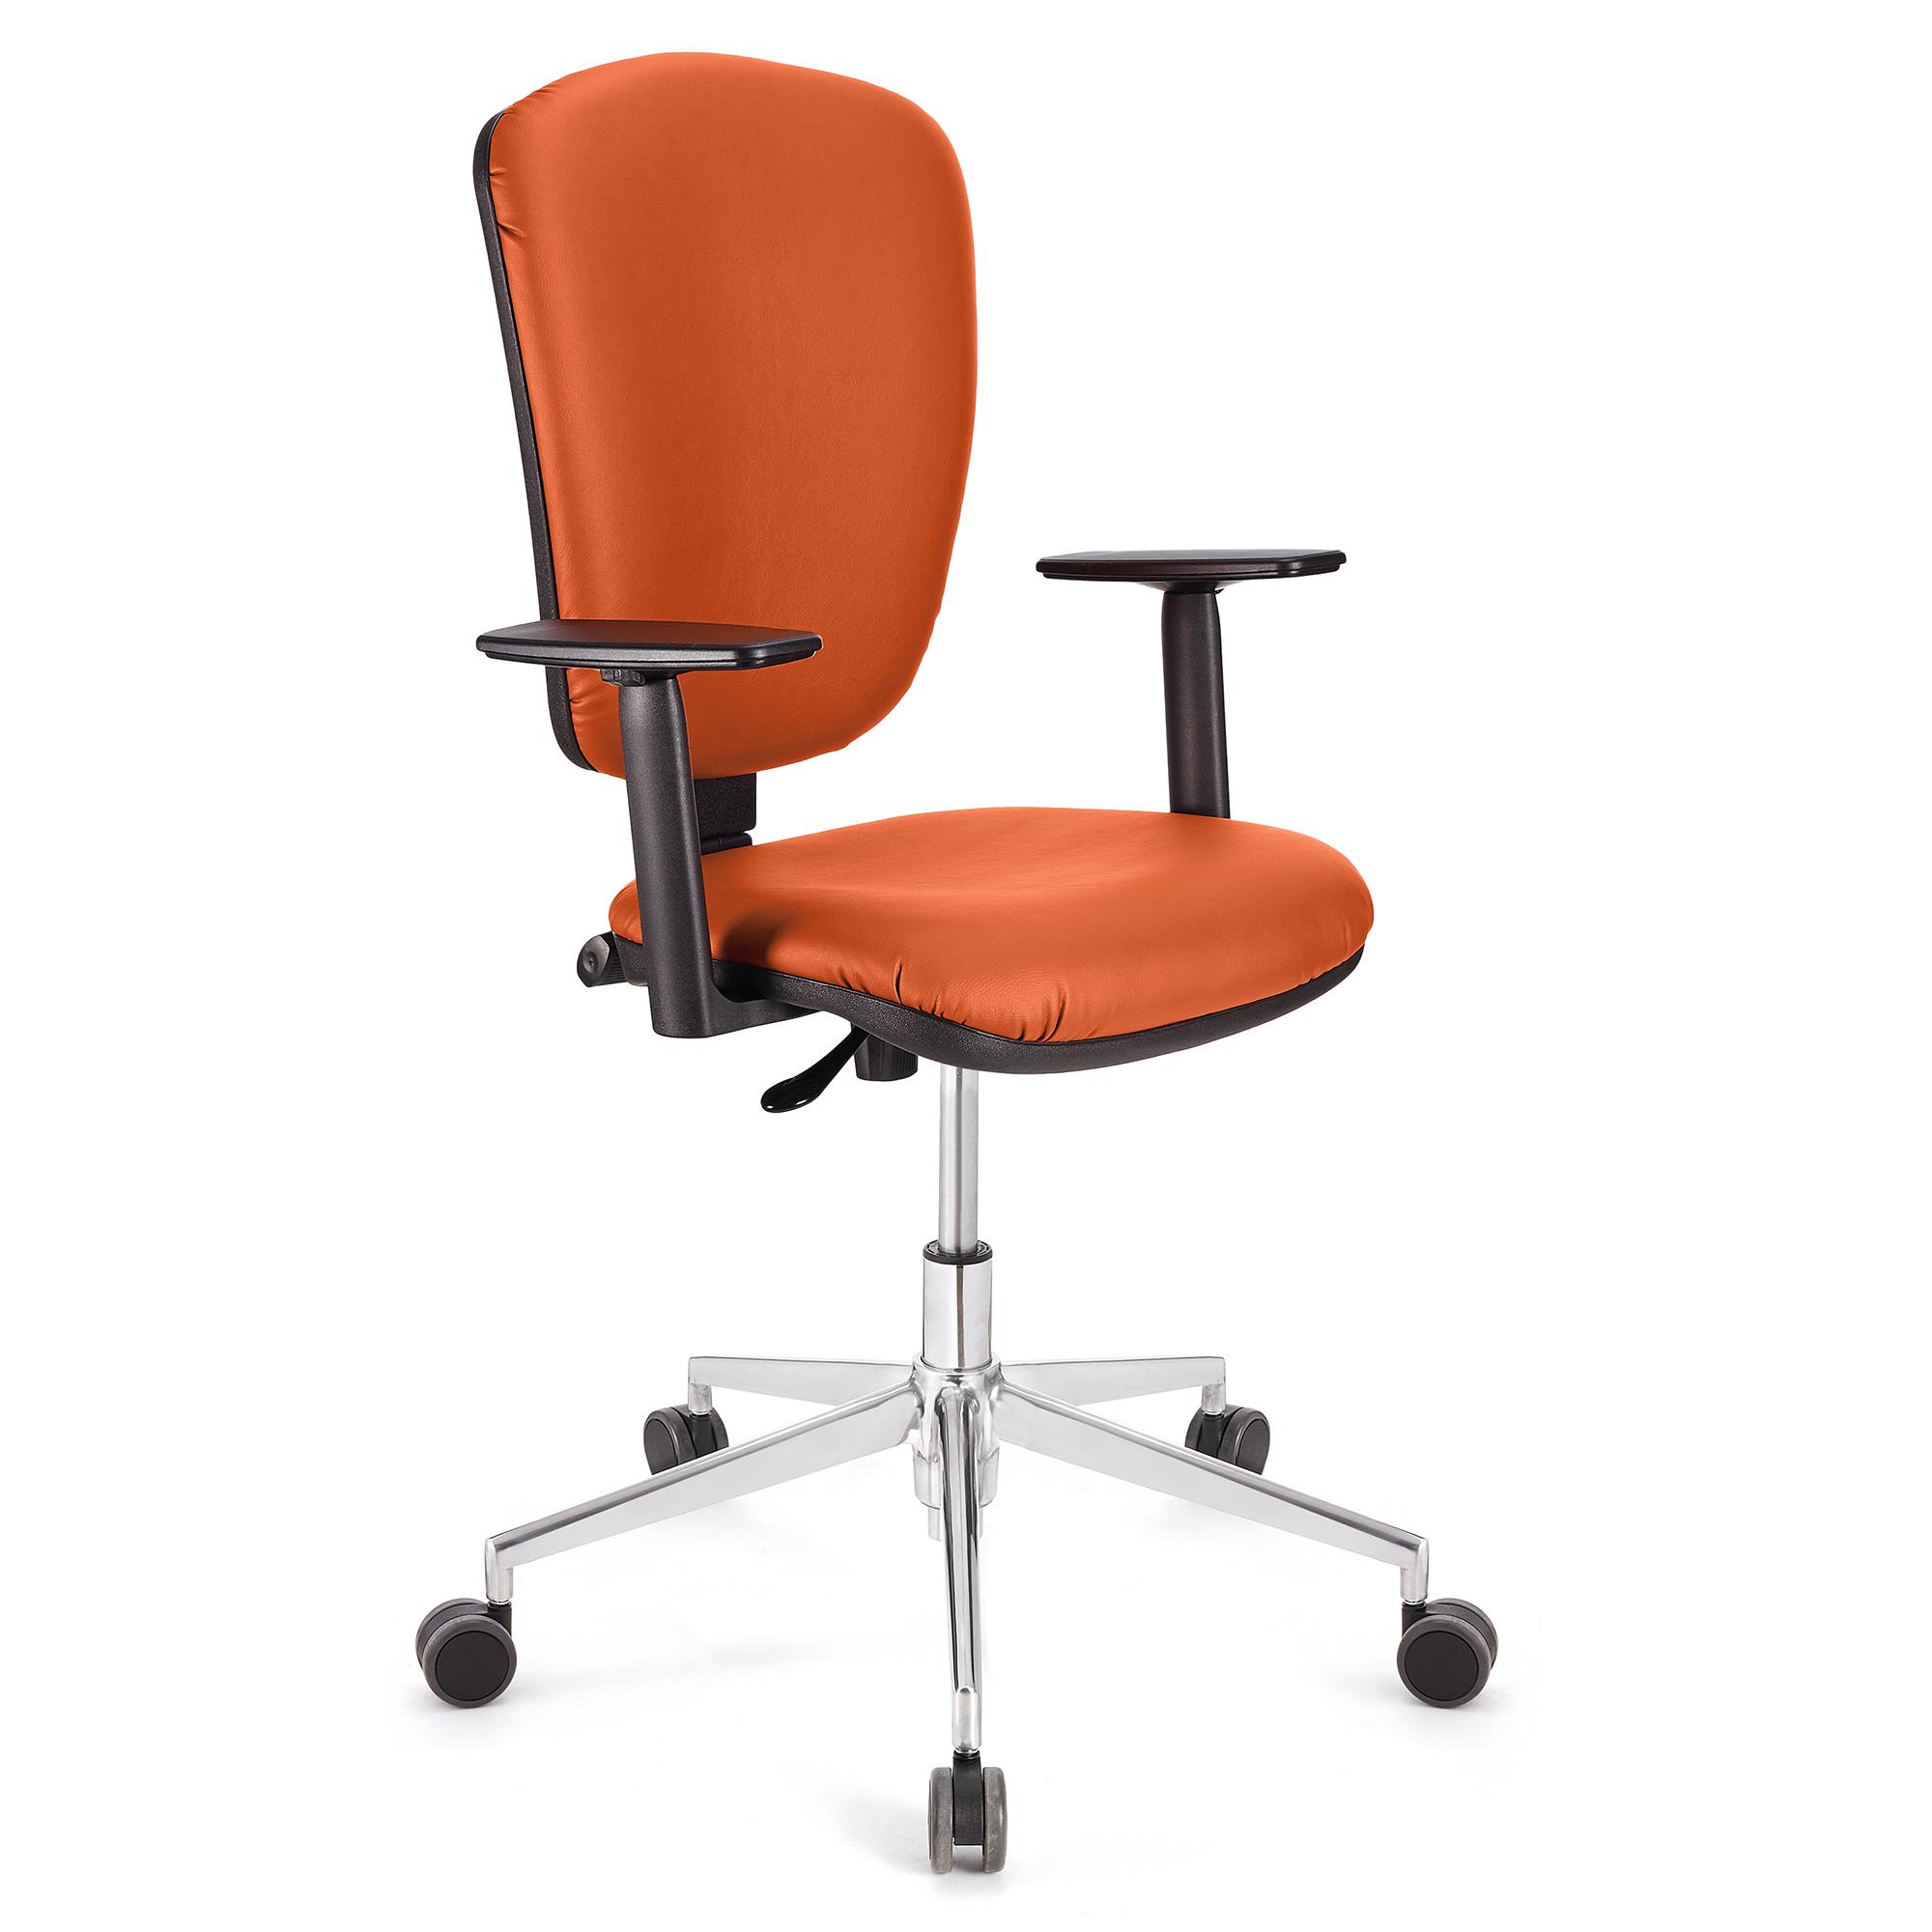 Bürostuhl KALIPSO PRO LEDER, verstellbare Rücken- und Armlehnen, Metallgestell, Lederbezug, Farbe Orange